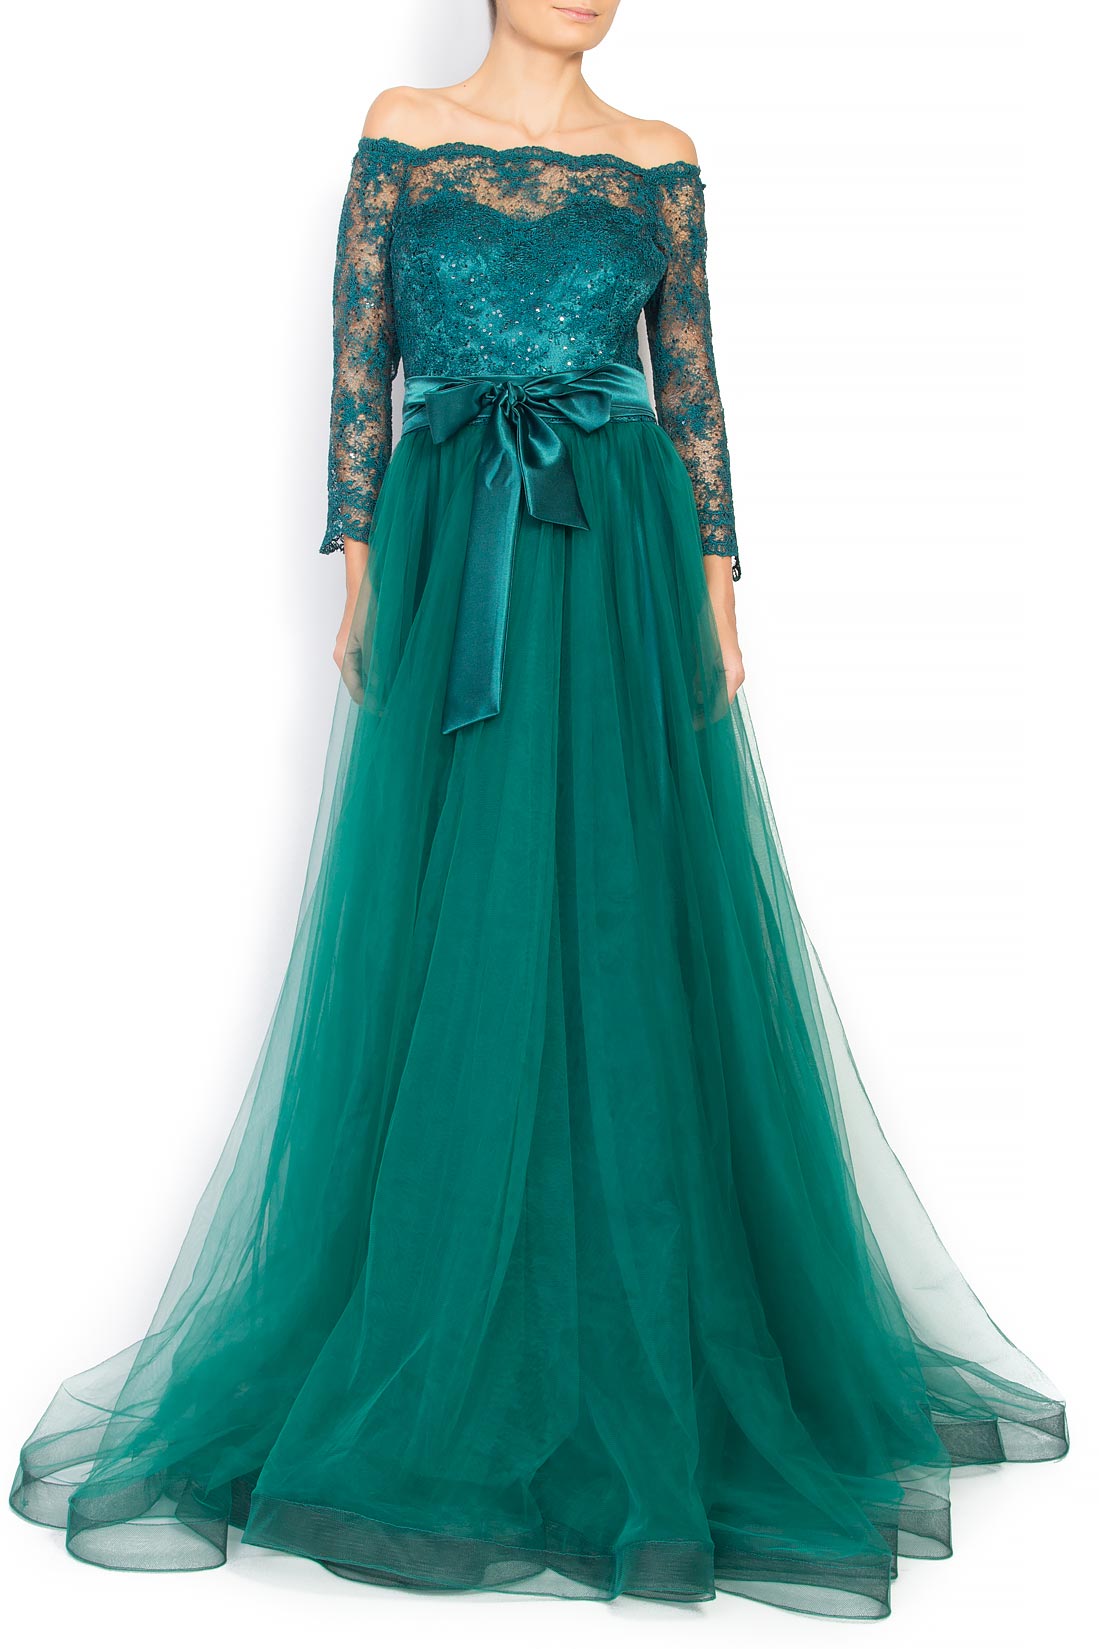 Lace and tulle gown Raffaela Moraru image 0